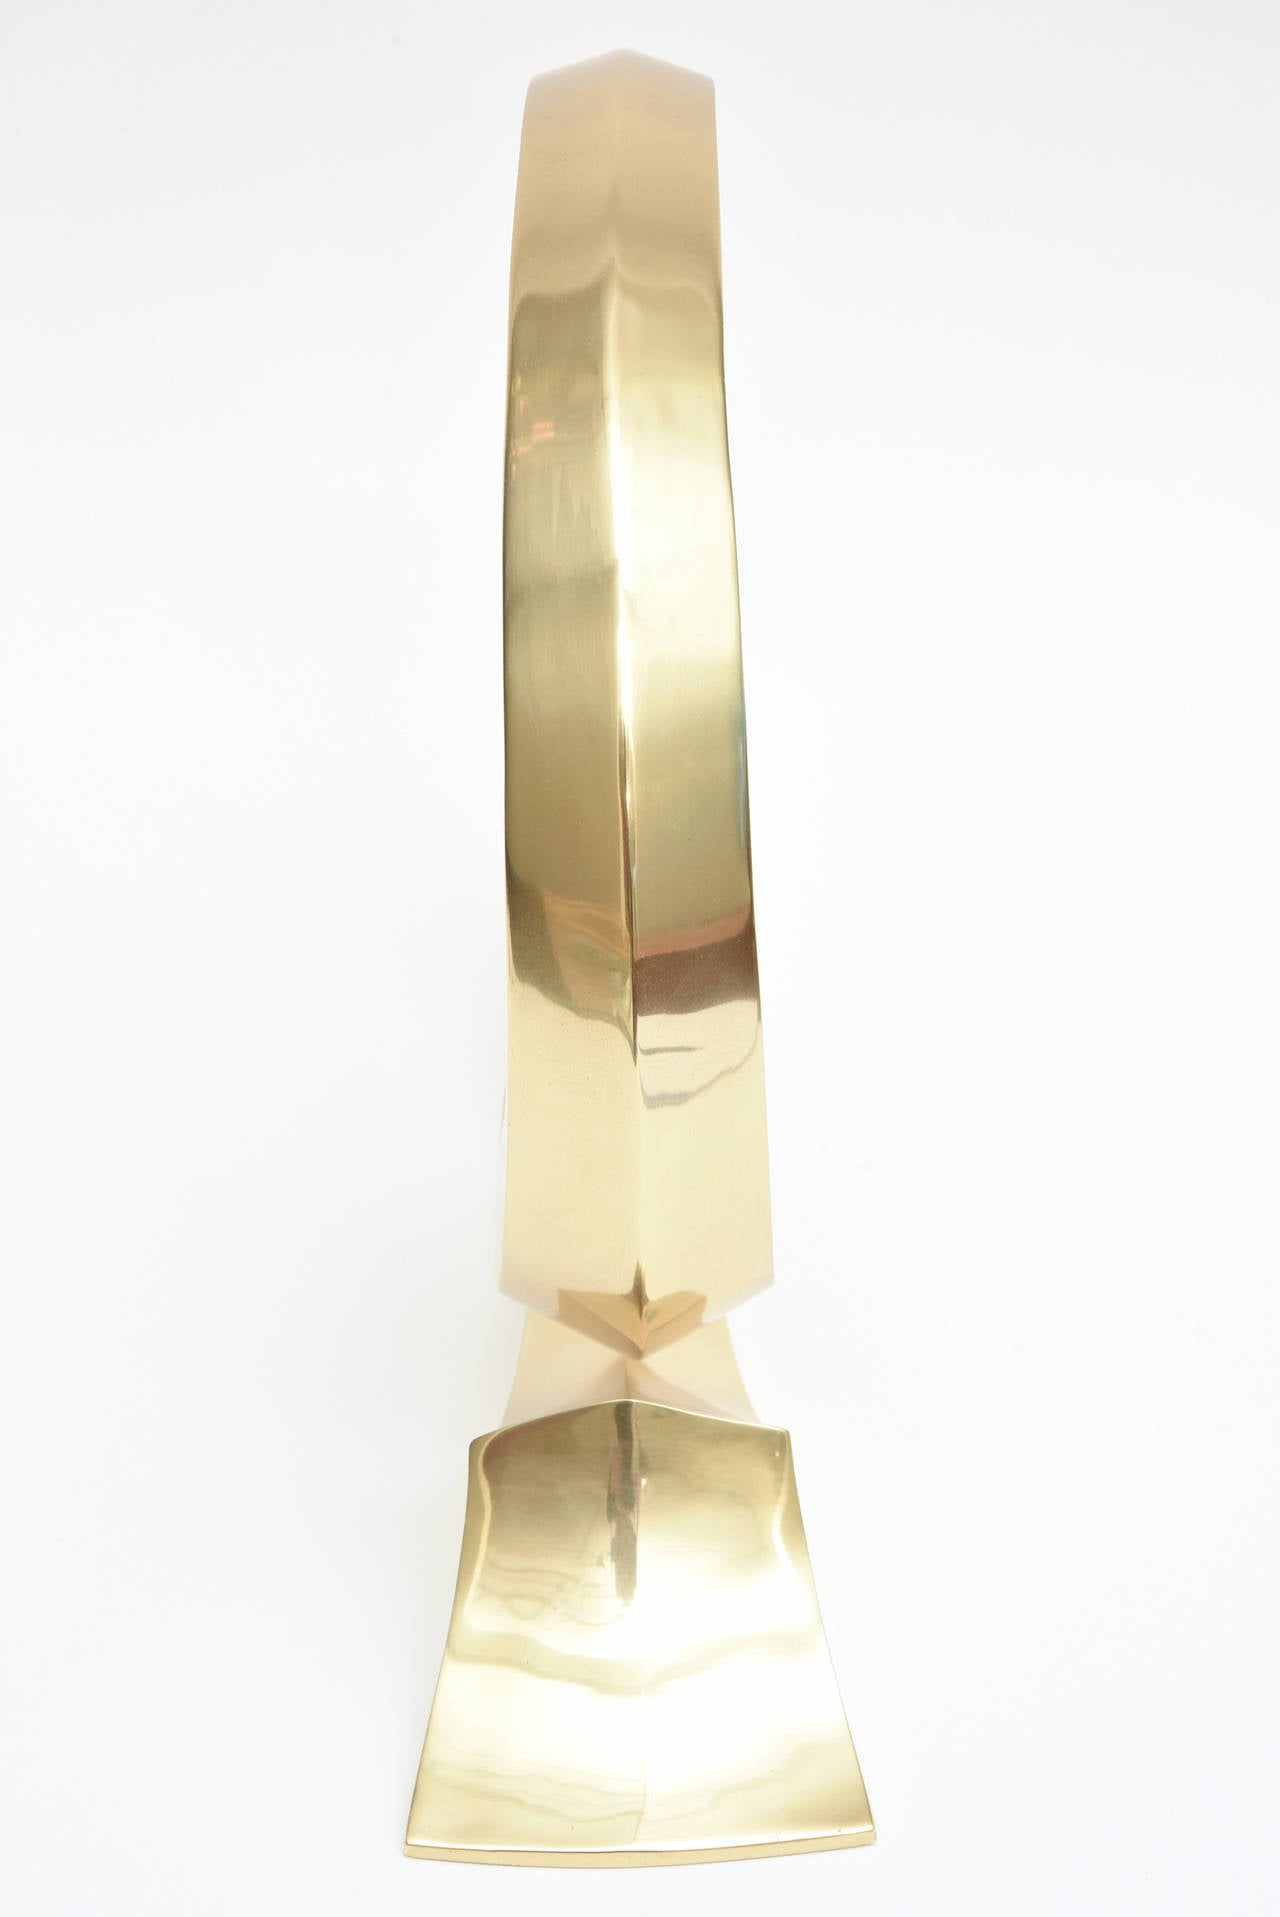 Iconic Pierre Cardin Brass Tabletop Sculpture  3